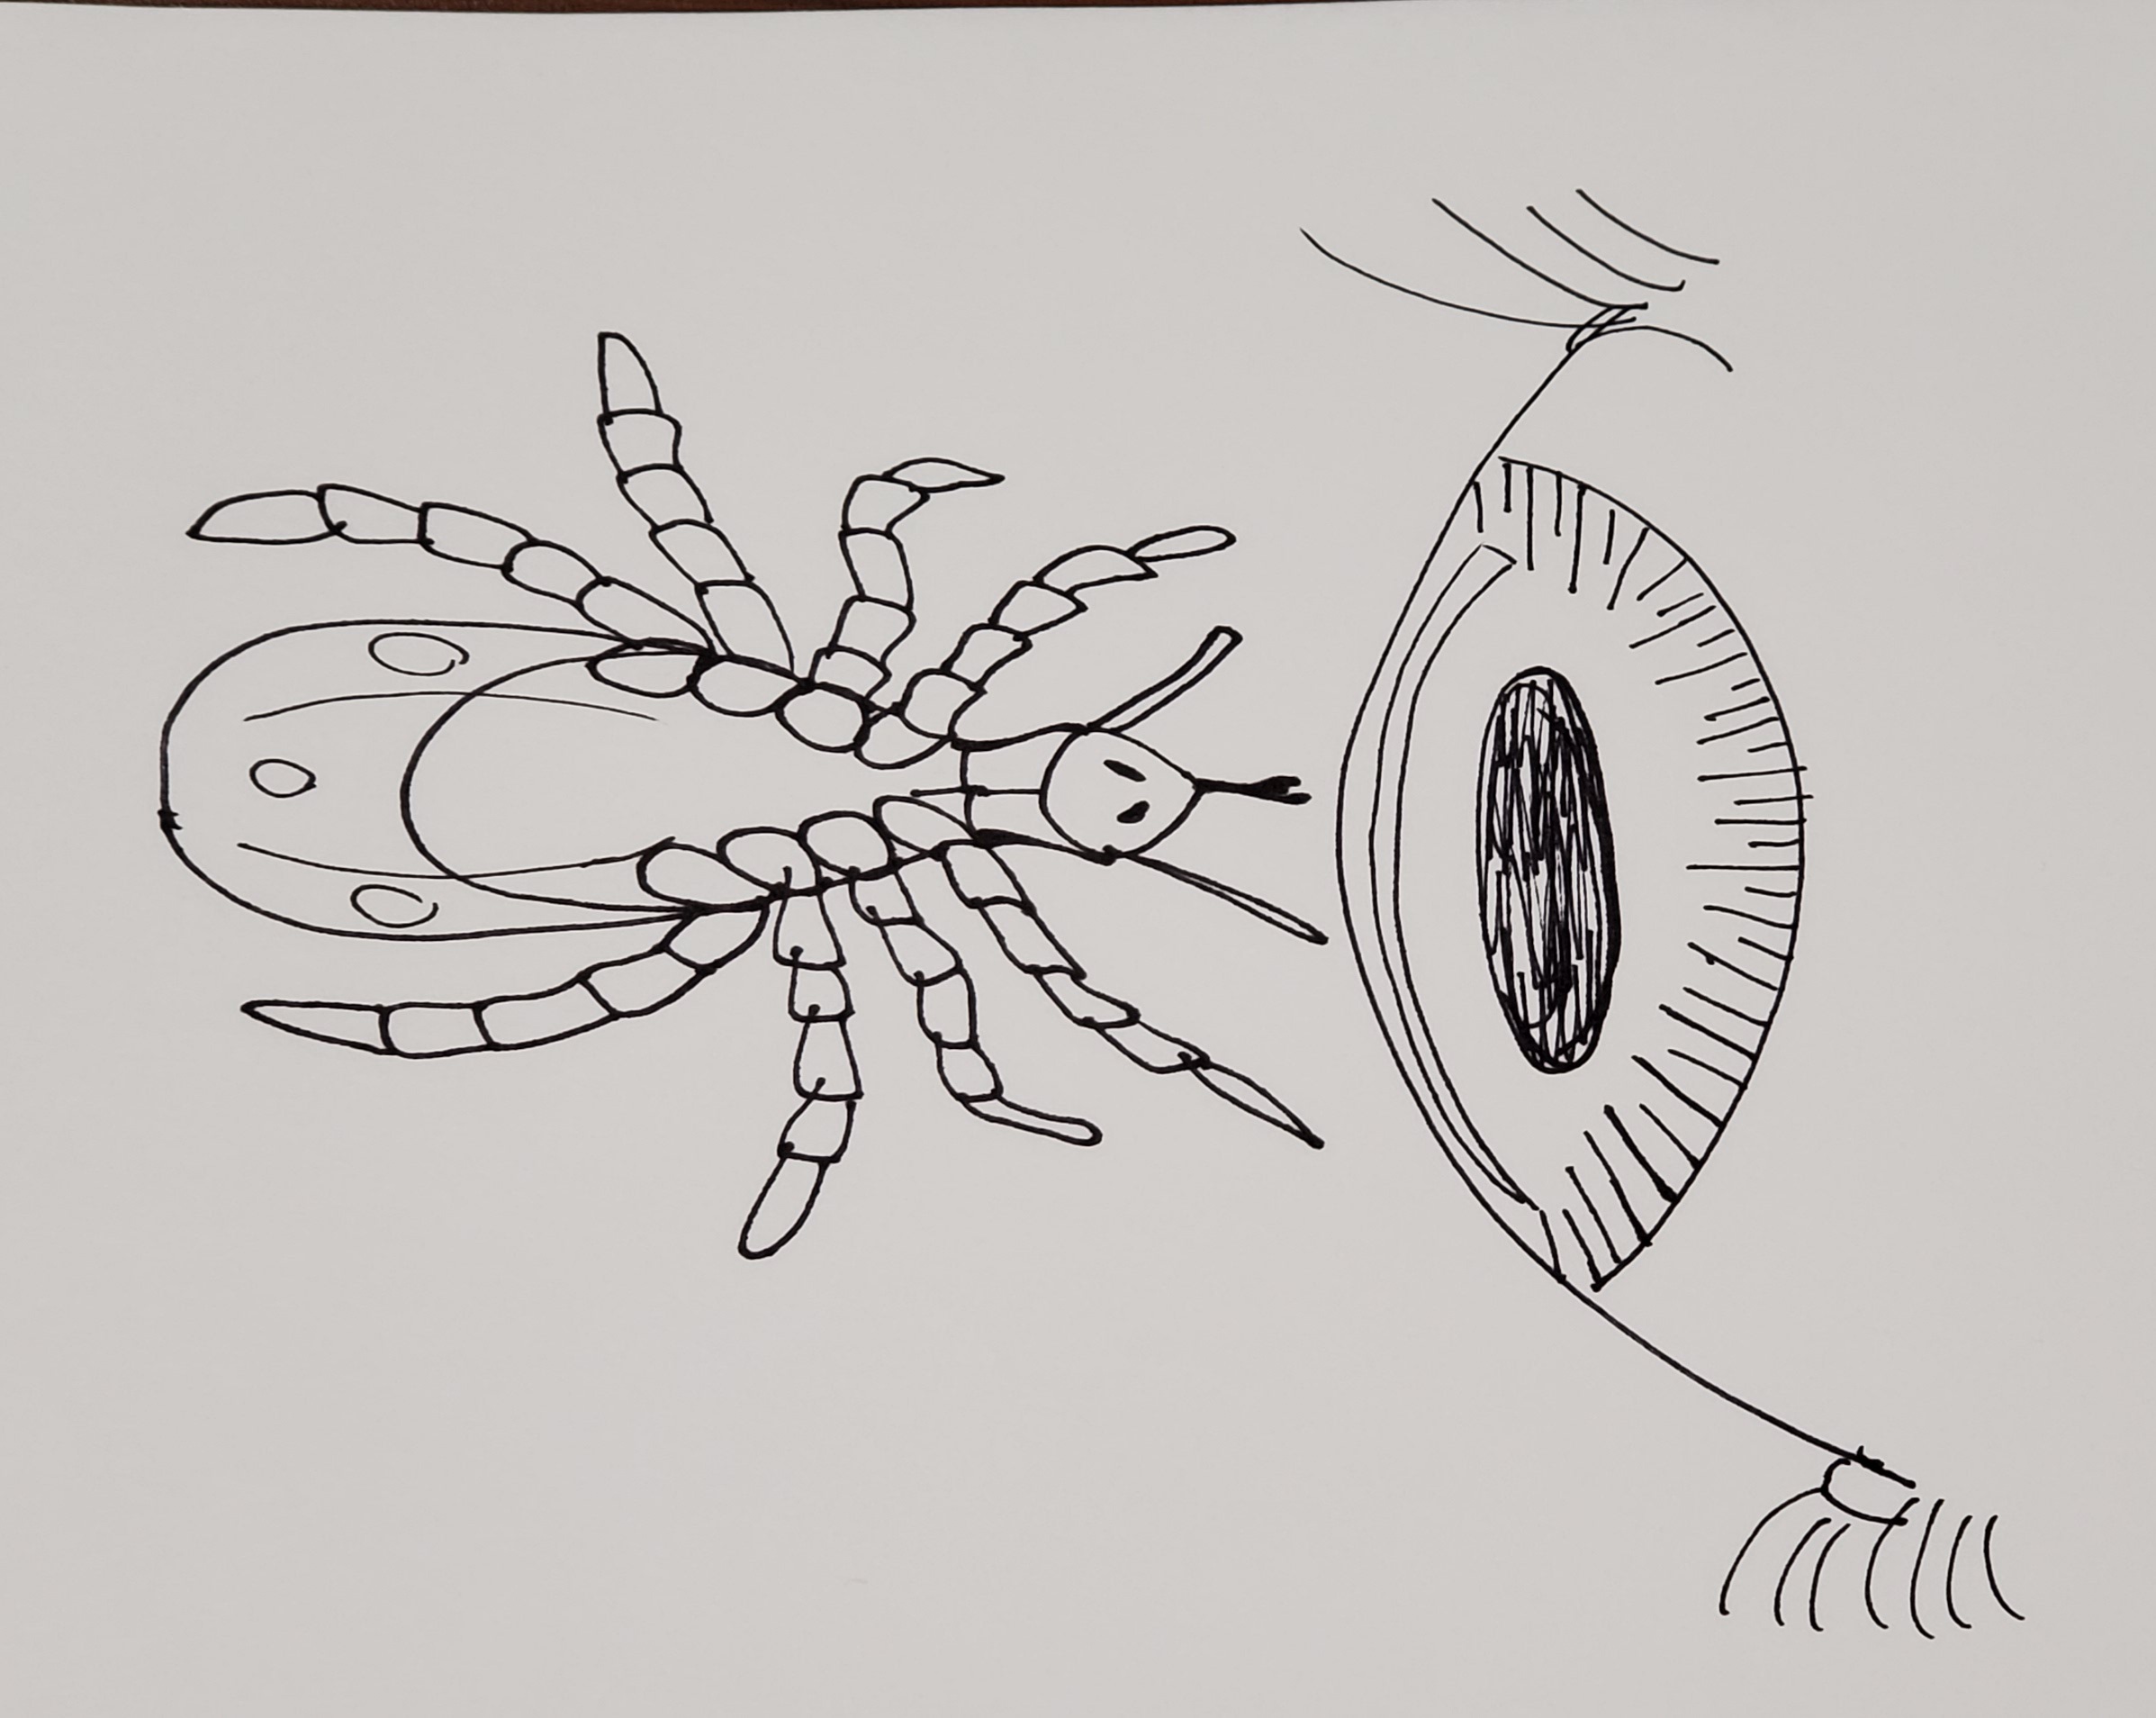 Tick and Eye Illustration